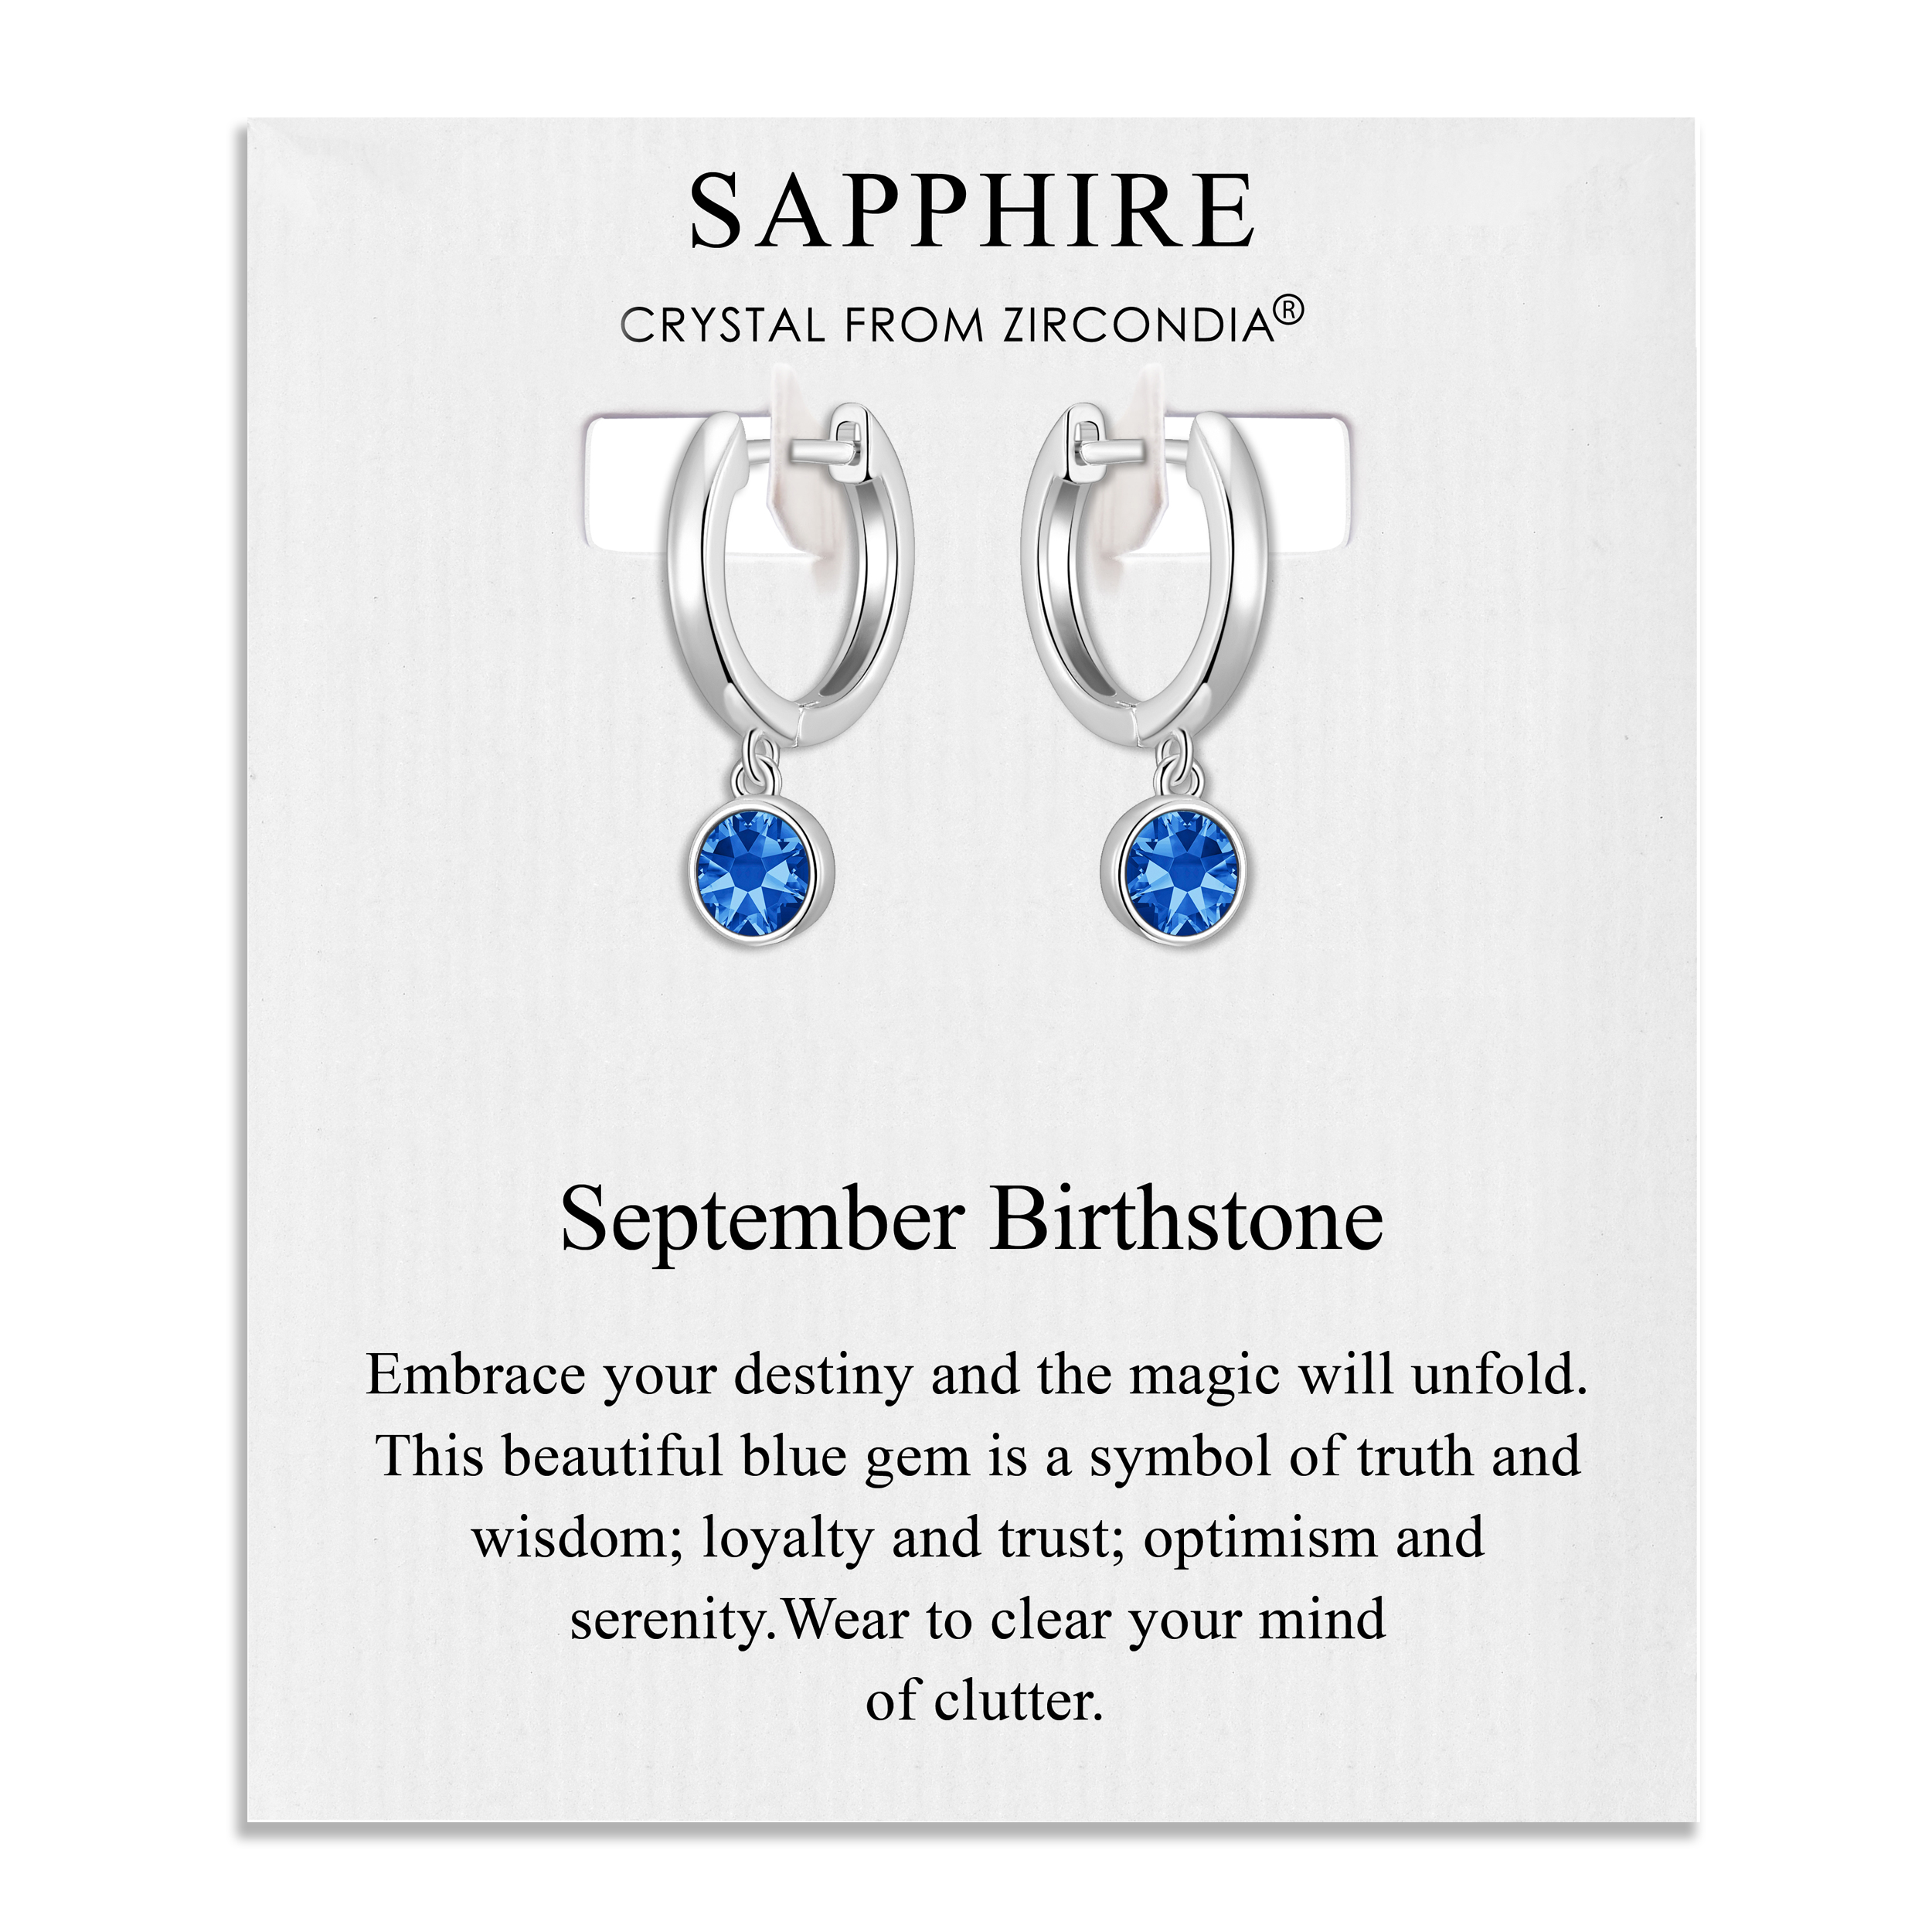 September Birthstone Hoop Earrings Created with Sapphire Zircondia® Crystals by Philip Jones Jewellery